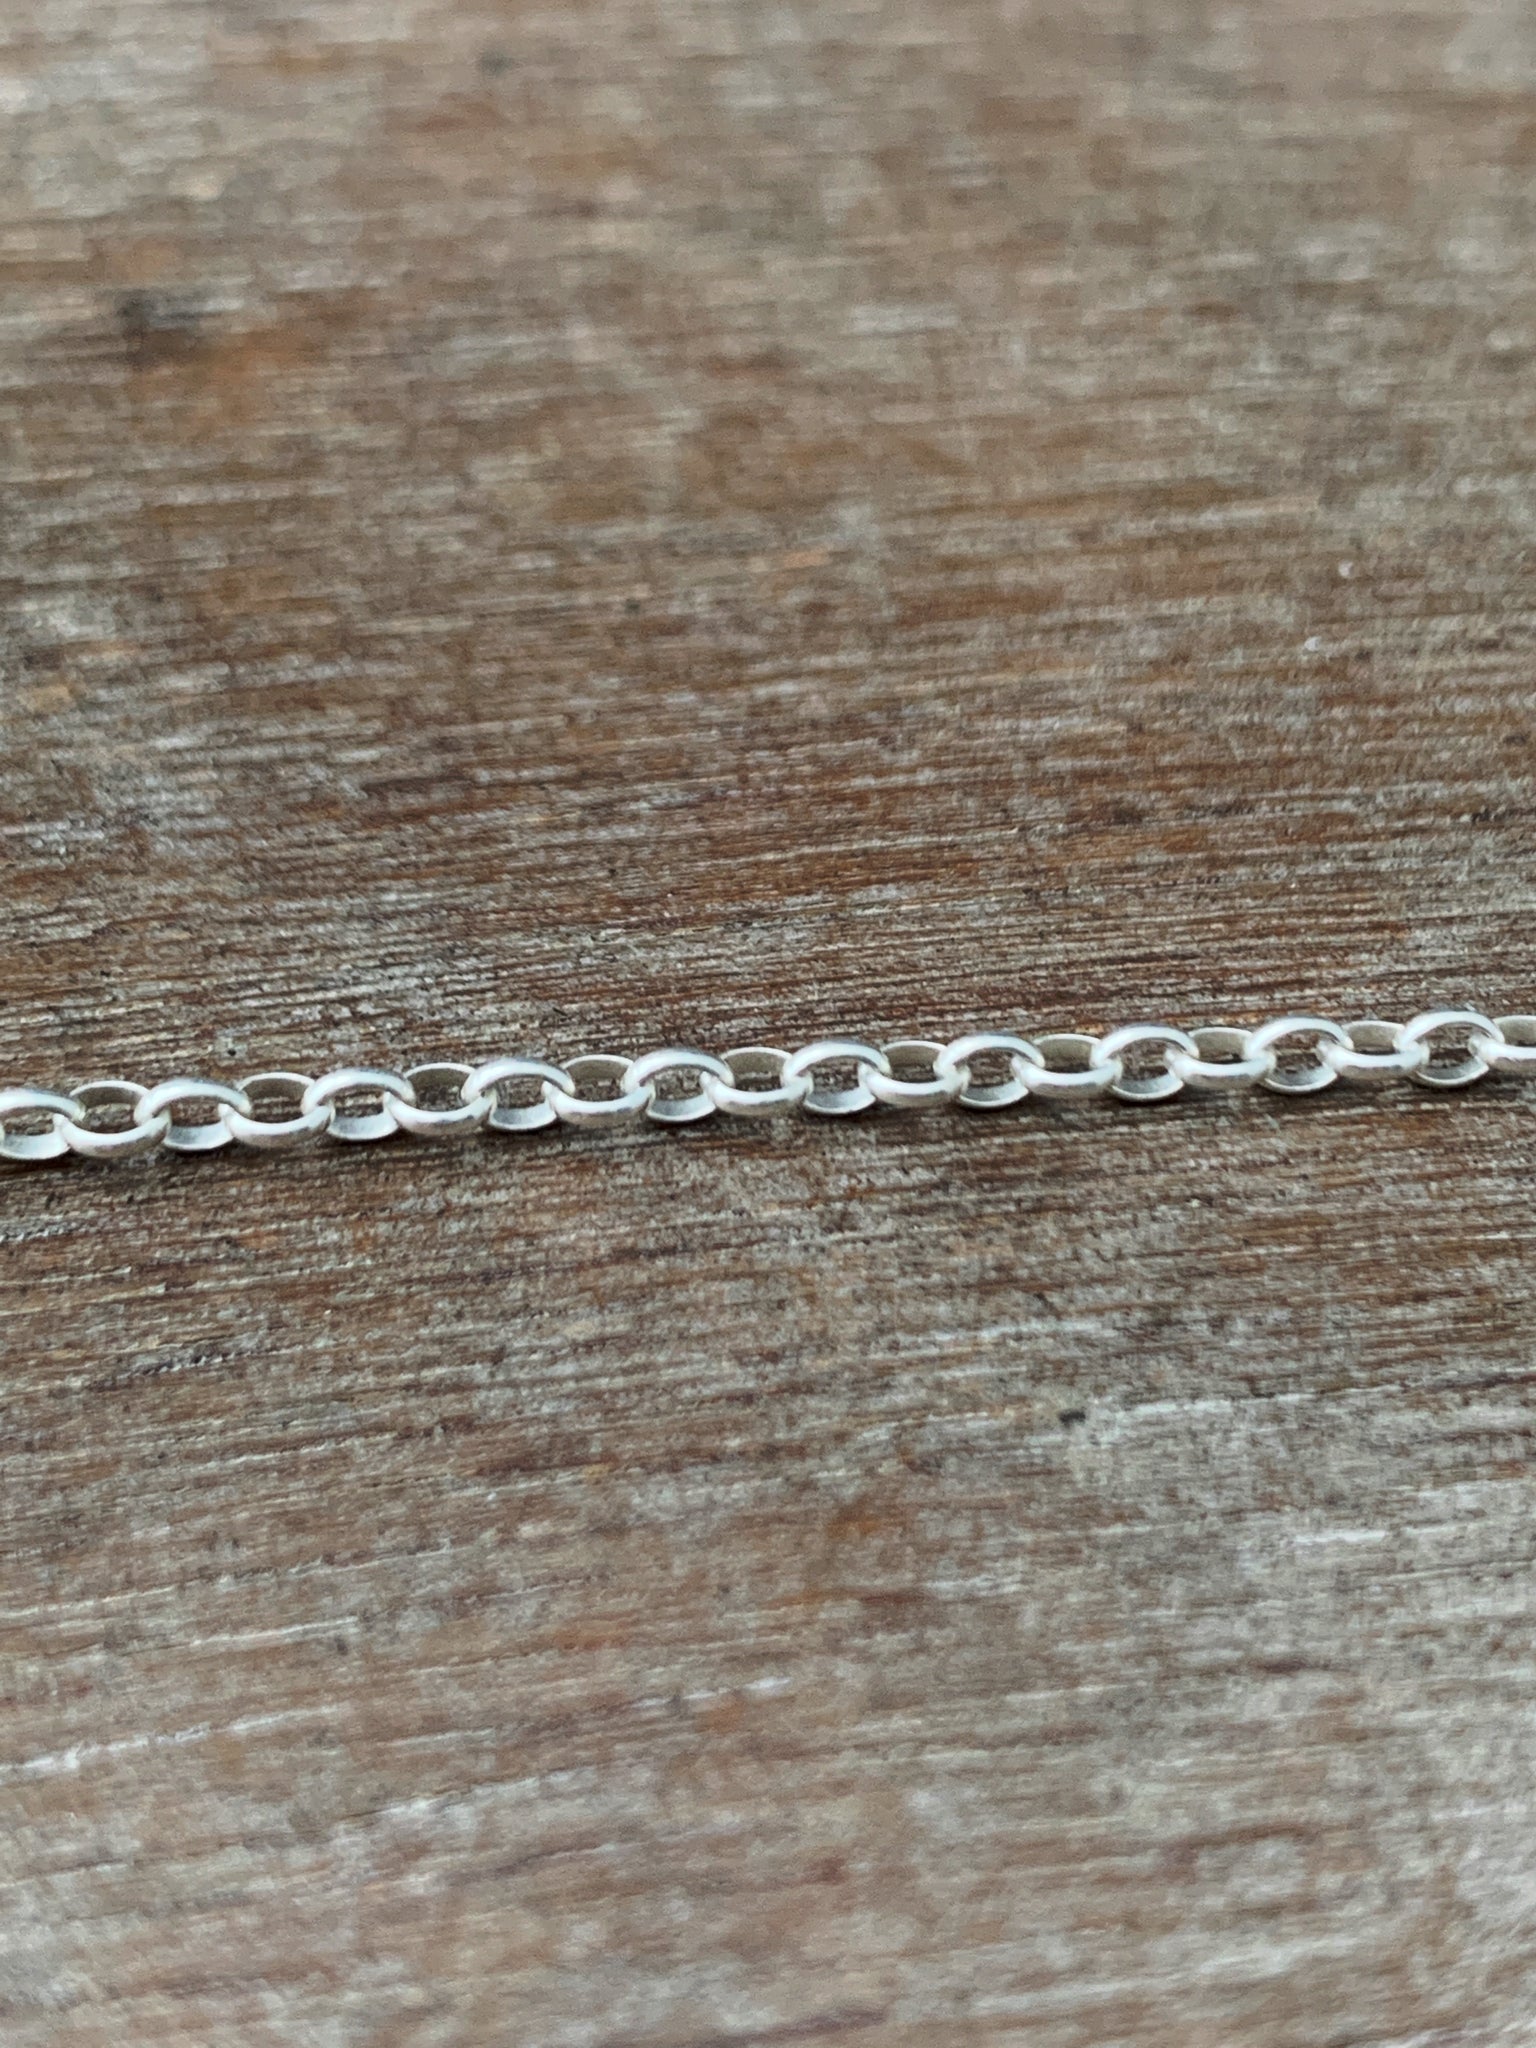 Chain Necklace Small Silver